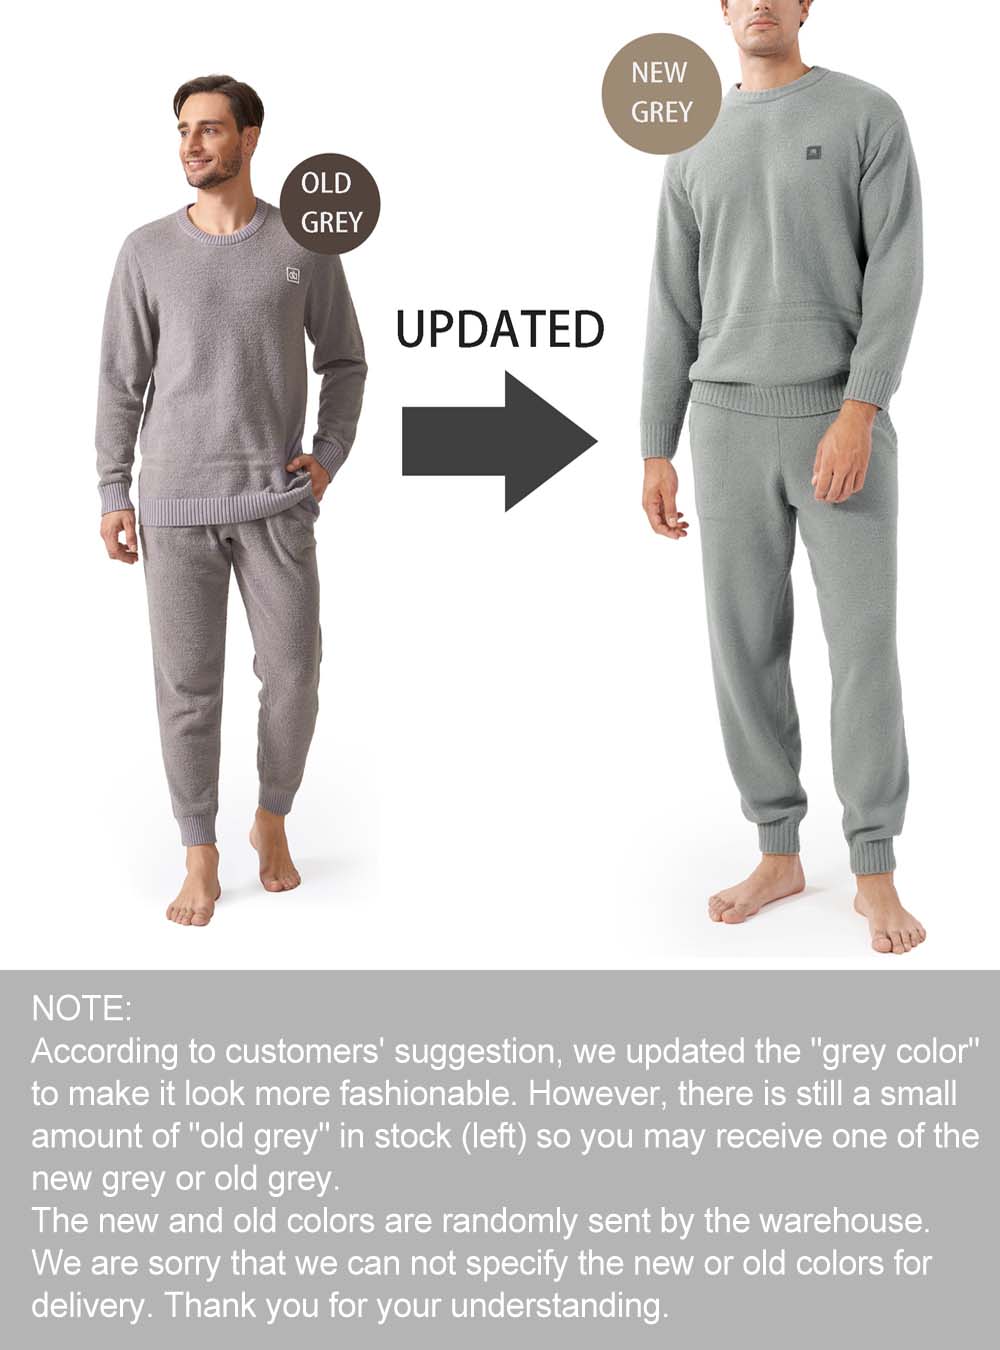 David Archy Pajama Set Plush Fleece Warm Cozy Men's Nightwear Set